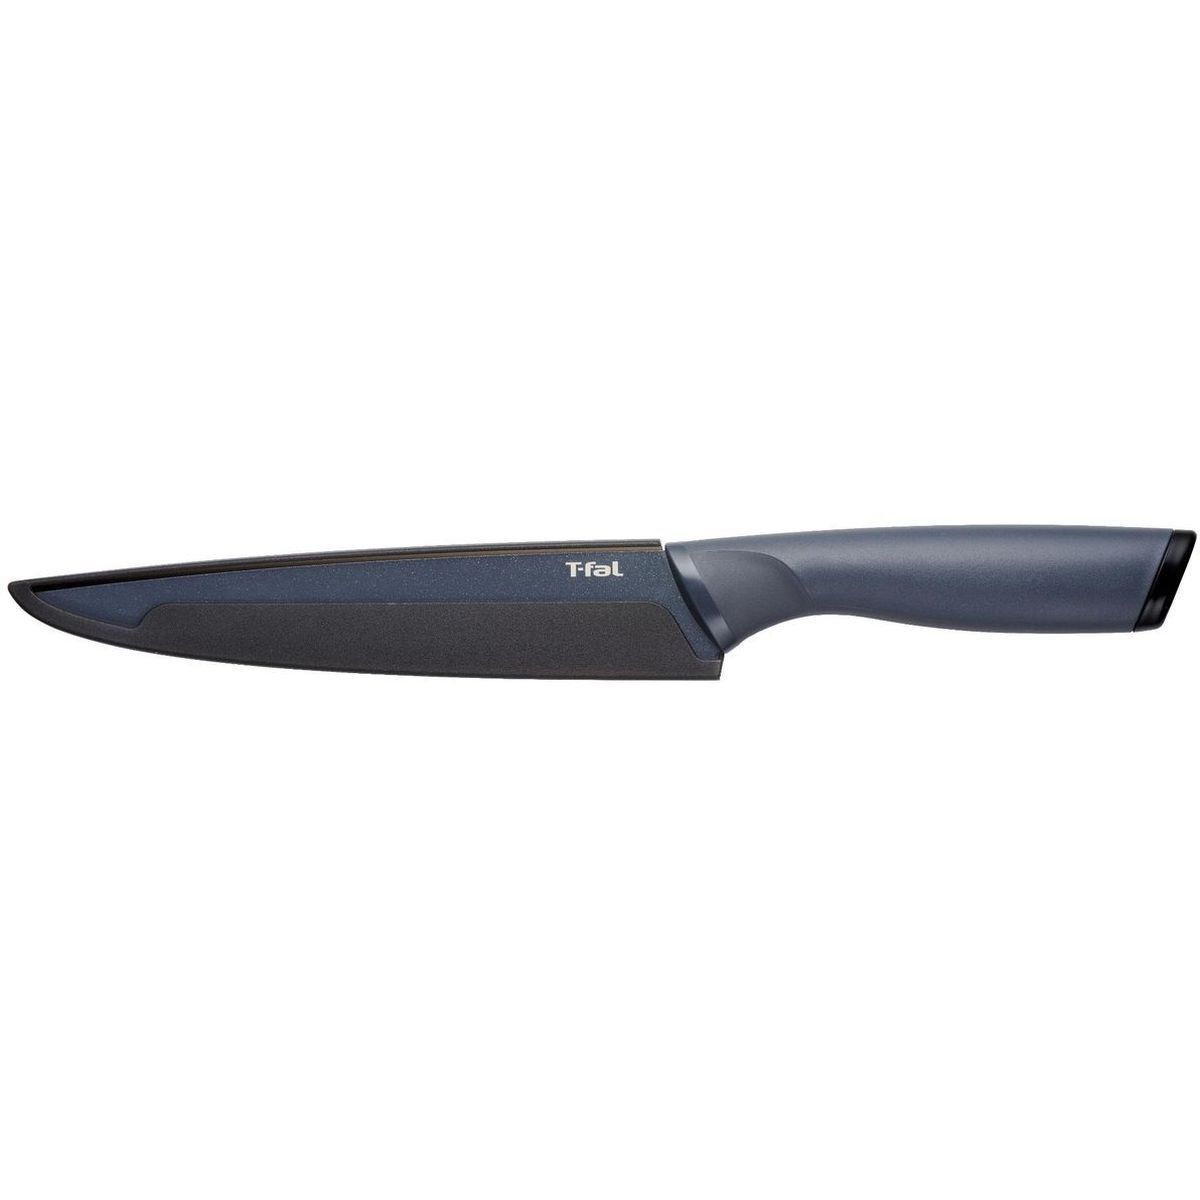 T-fal スライスナイフ スライシングナイフ 20cm フレッシュ キッチン スライシングナイフ チタン強化 コーティング